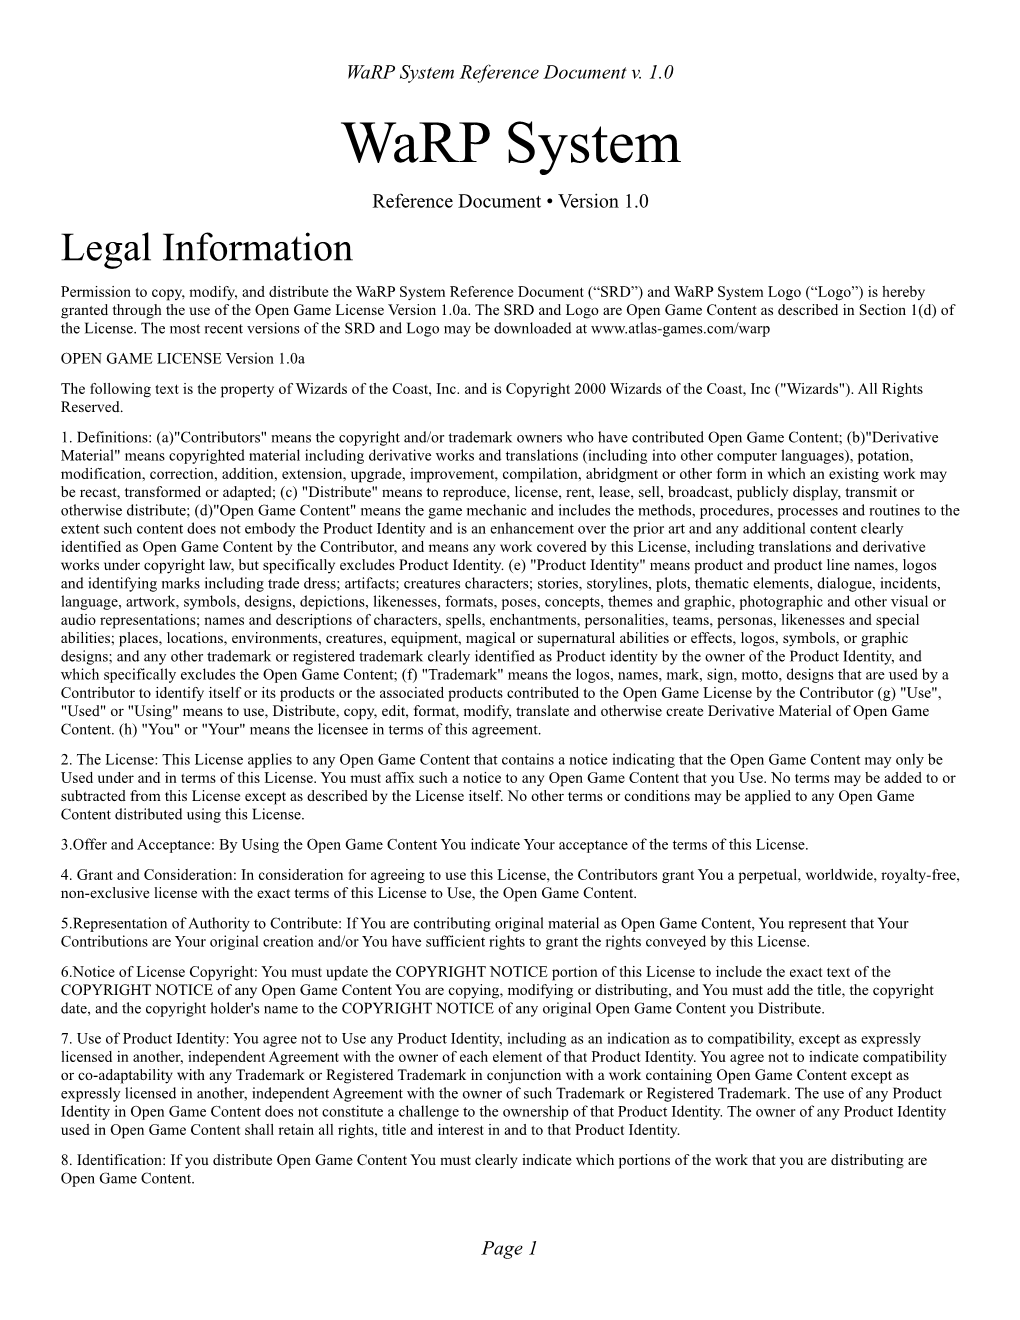 Warp System Reference Document V